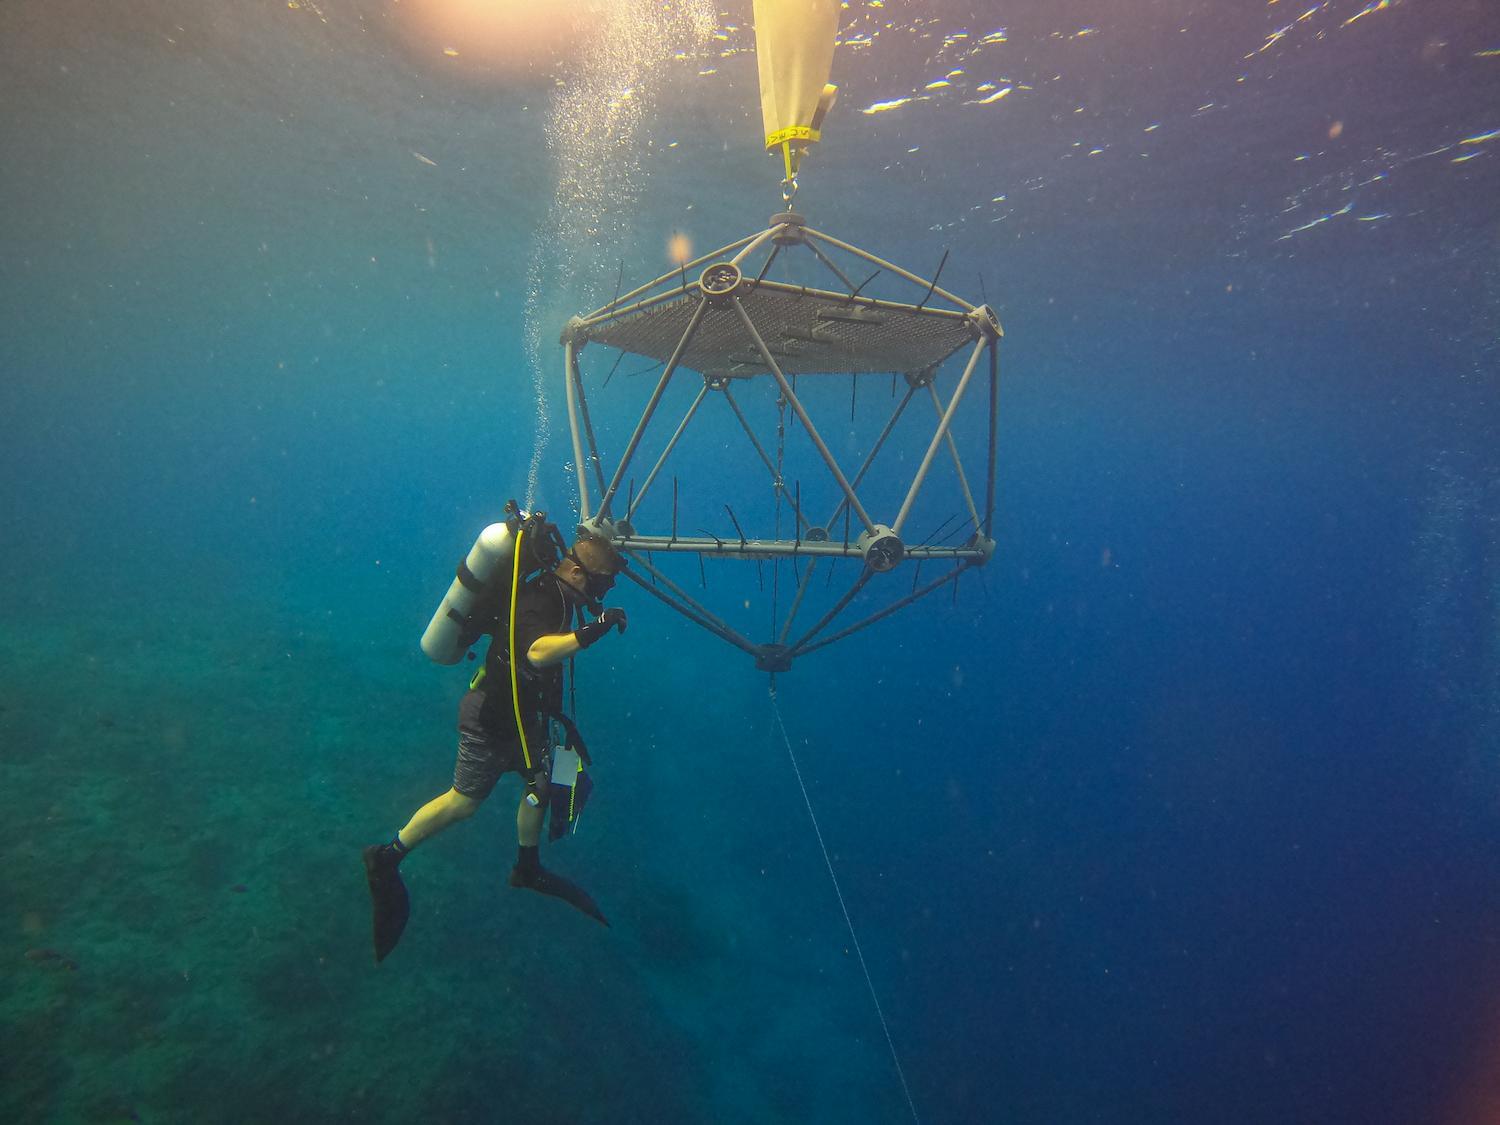 Nortek instrument under water with a diver